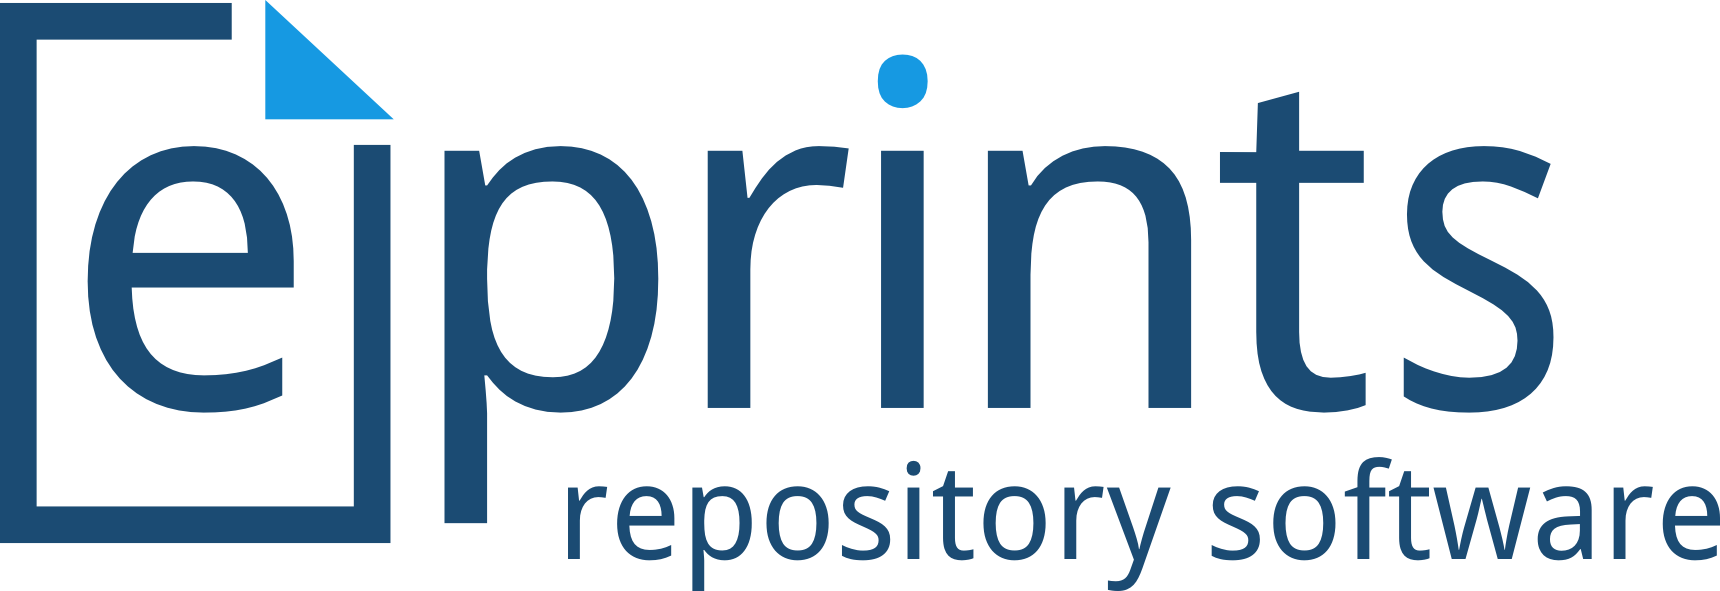 eprints-logo.png